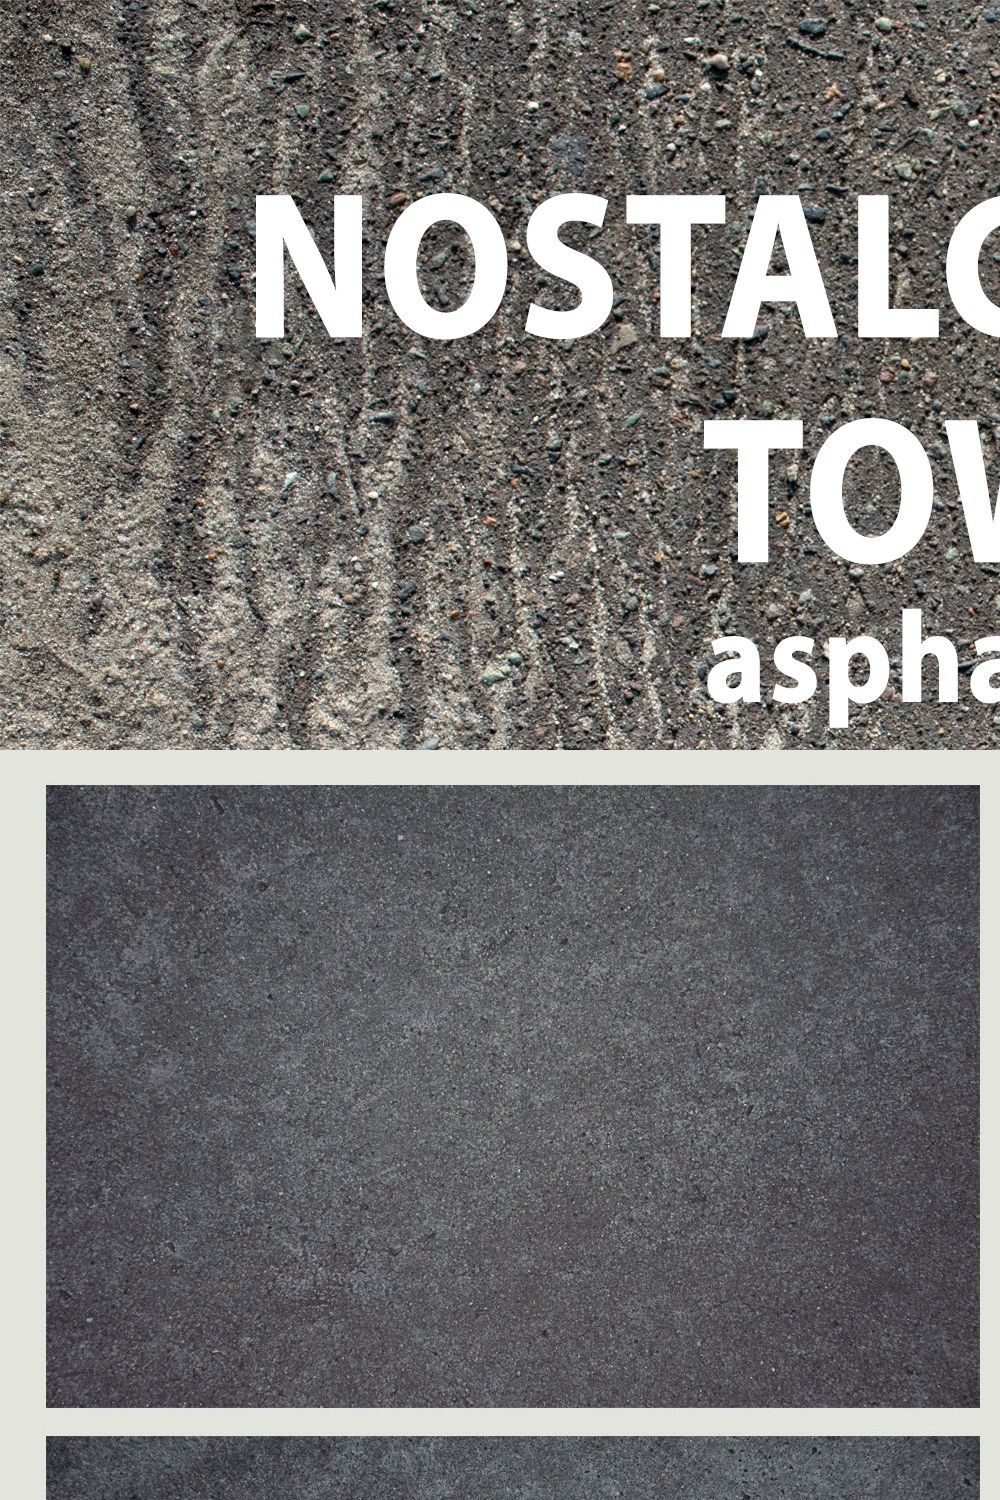 Nostalgic Town: Asphalt#2 pinterest preview image.